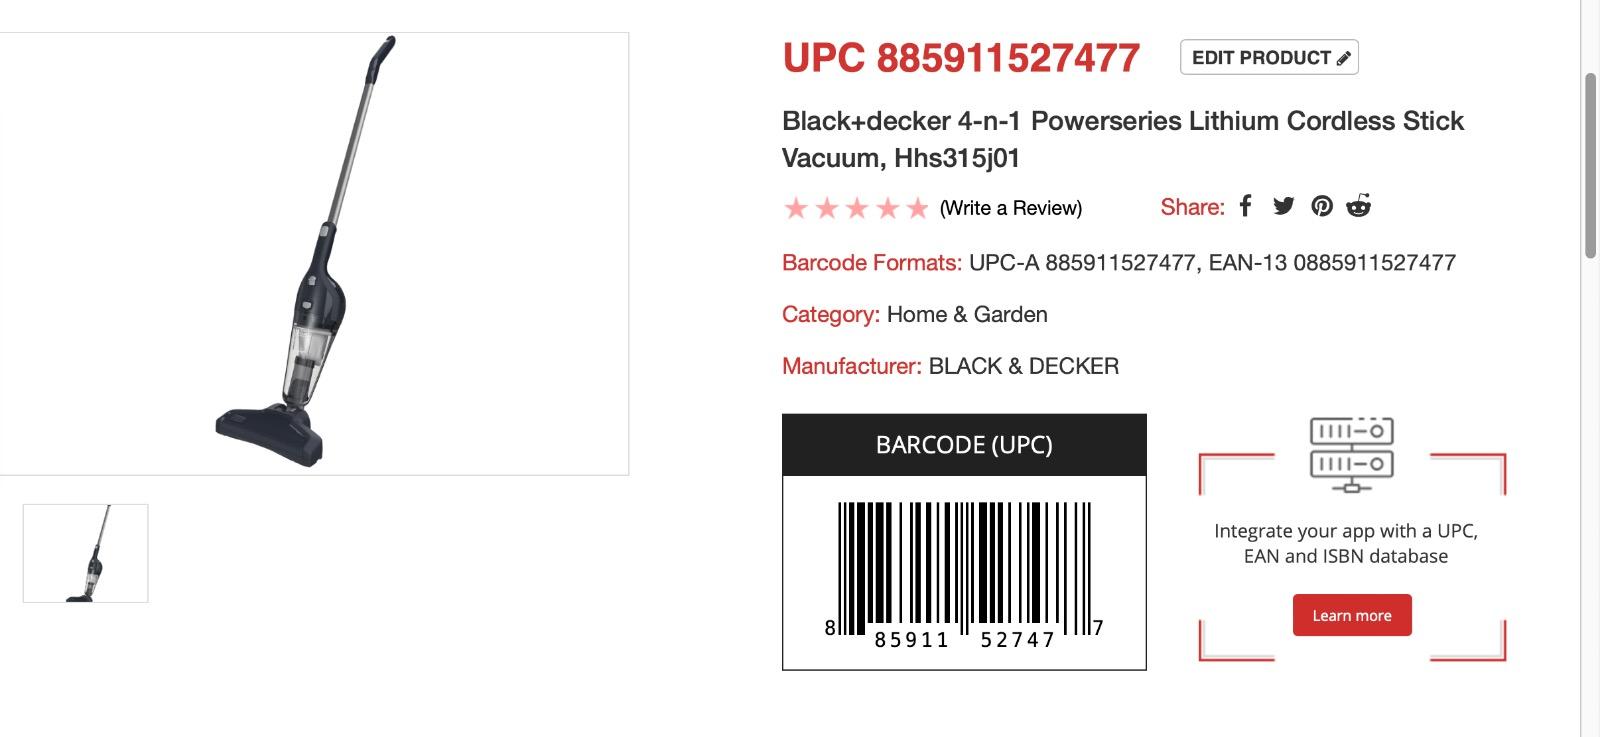 BLACK+DECKER 4-N-1 POWERSERIES LITHIUM CORDLESS STICK VACUUM, HHS315J01 